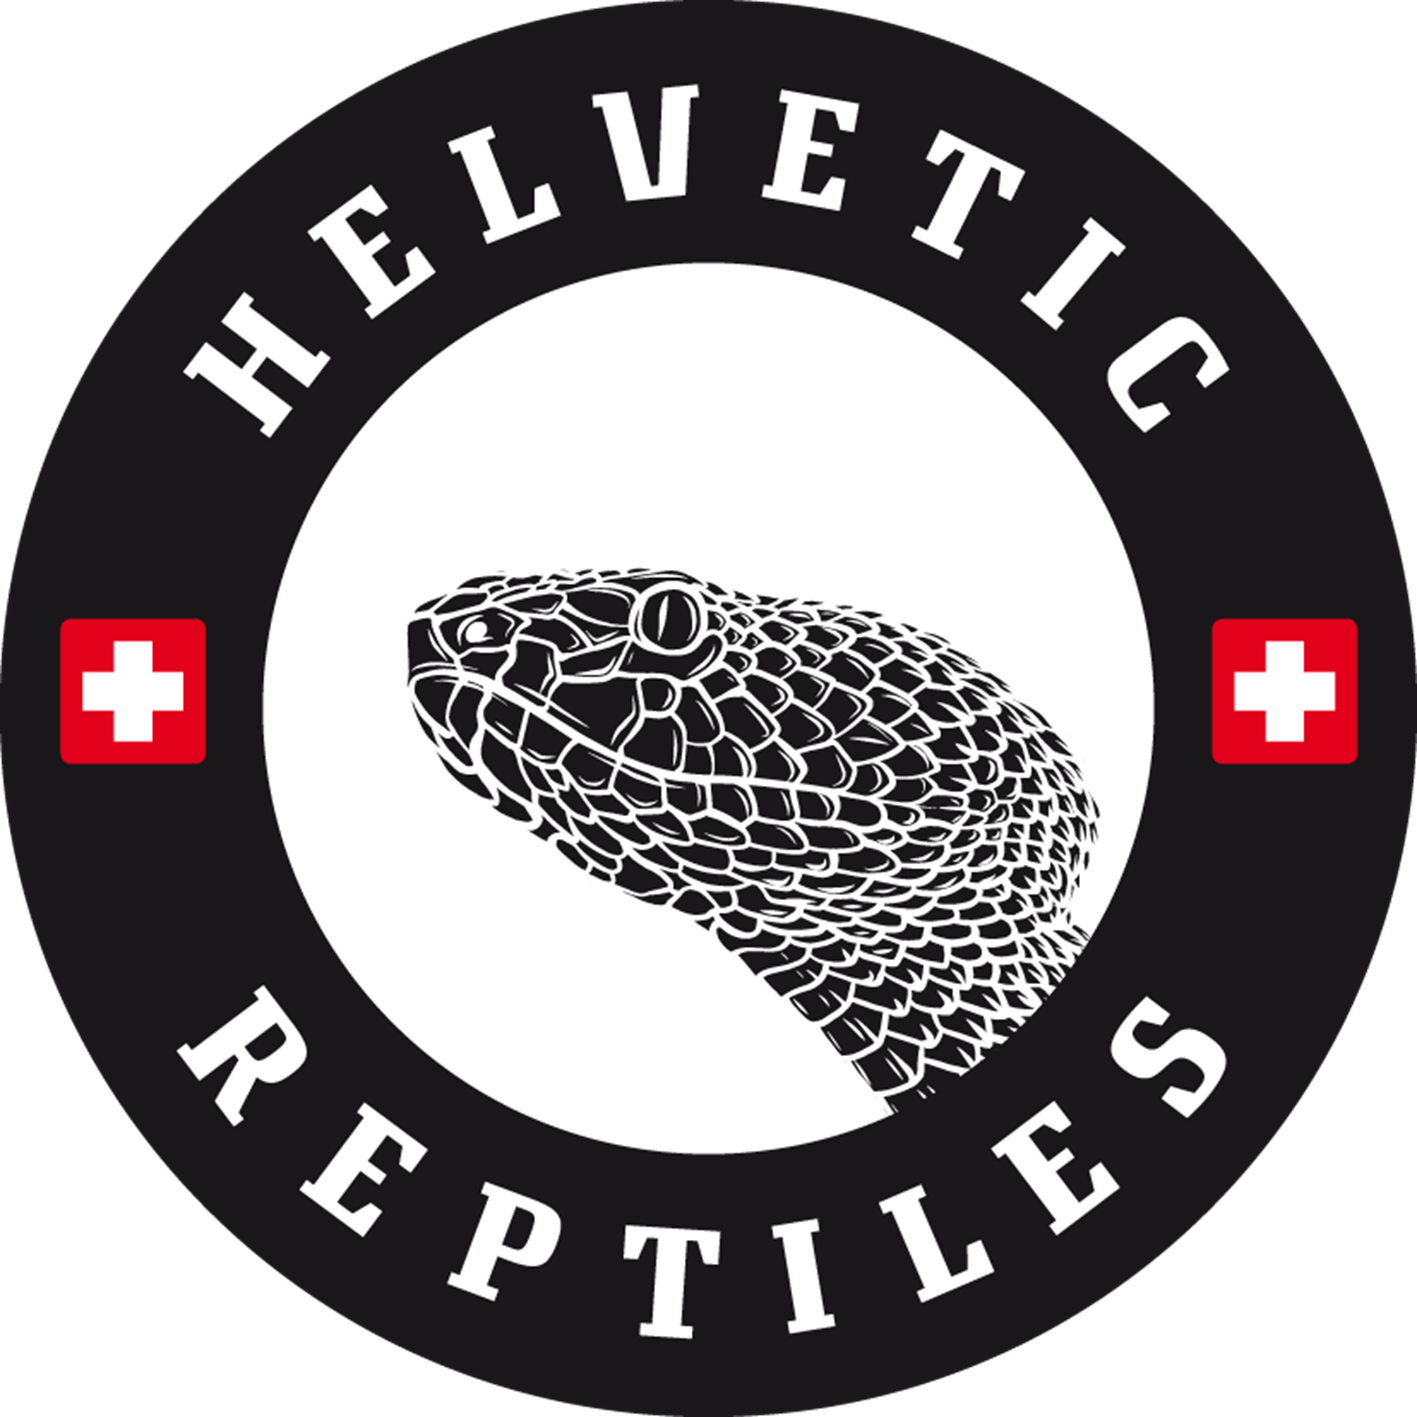 Helvetic Reptiles